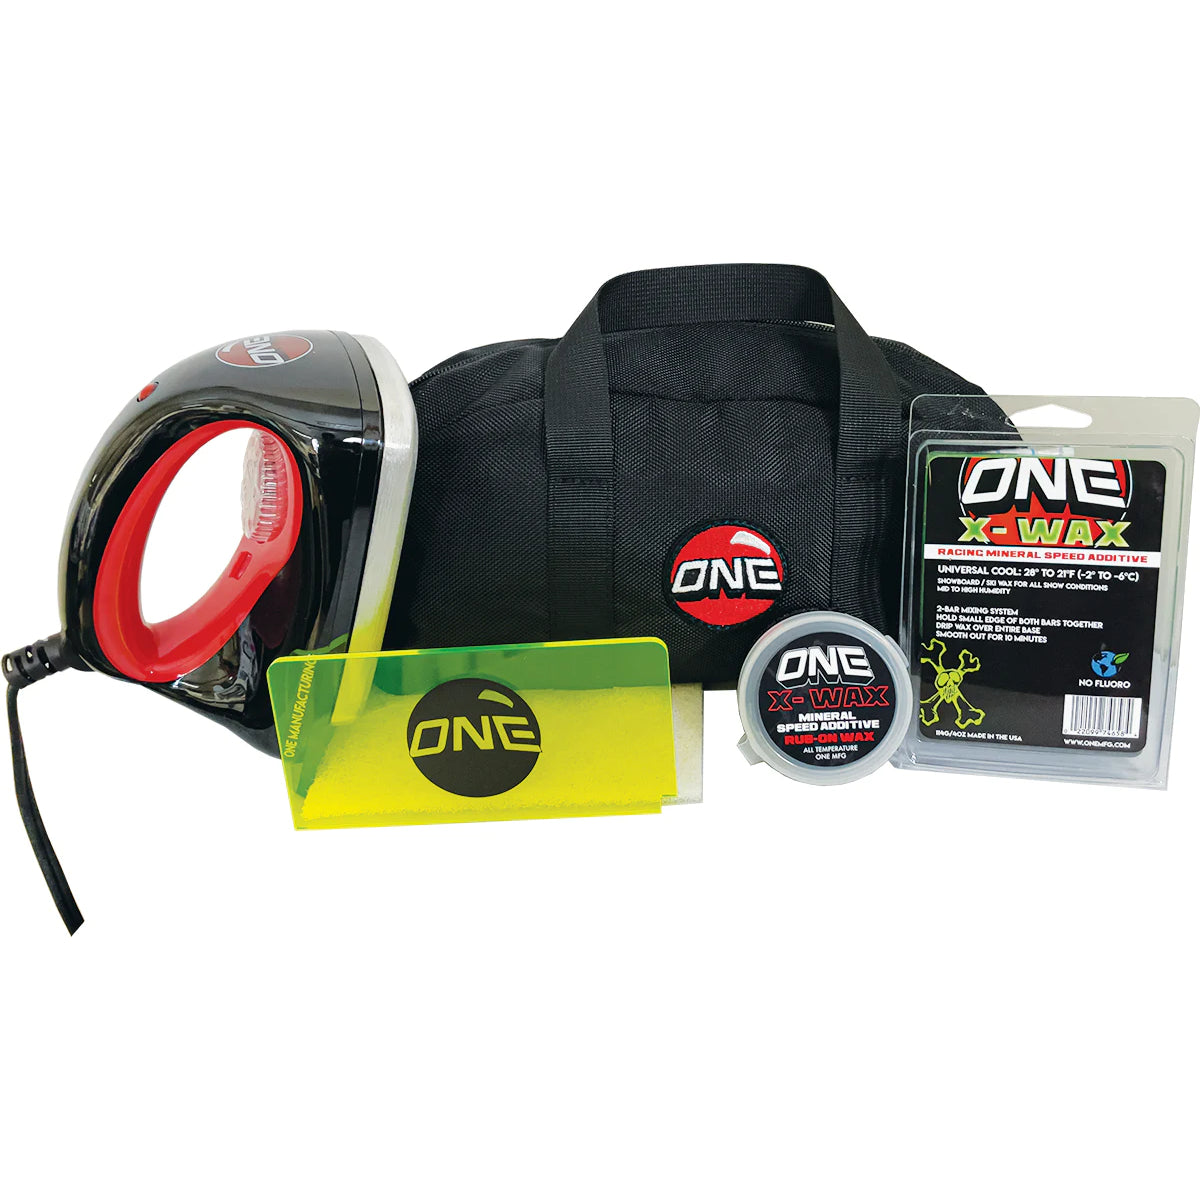 Oneball Hot Wax Snowboard Kit